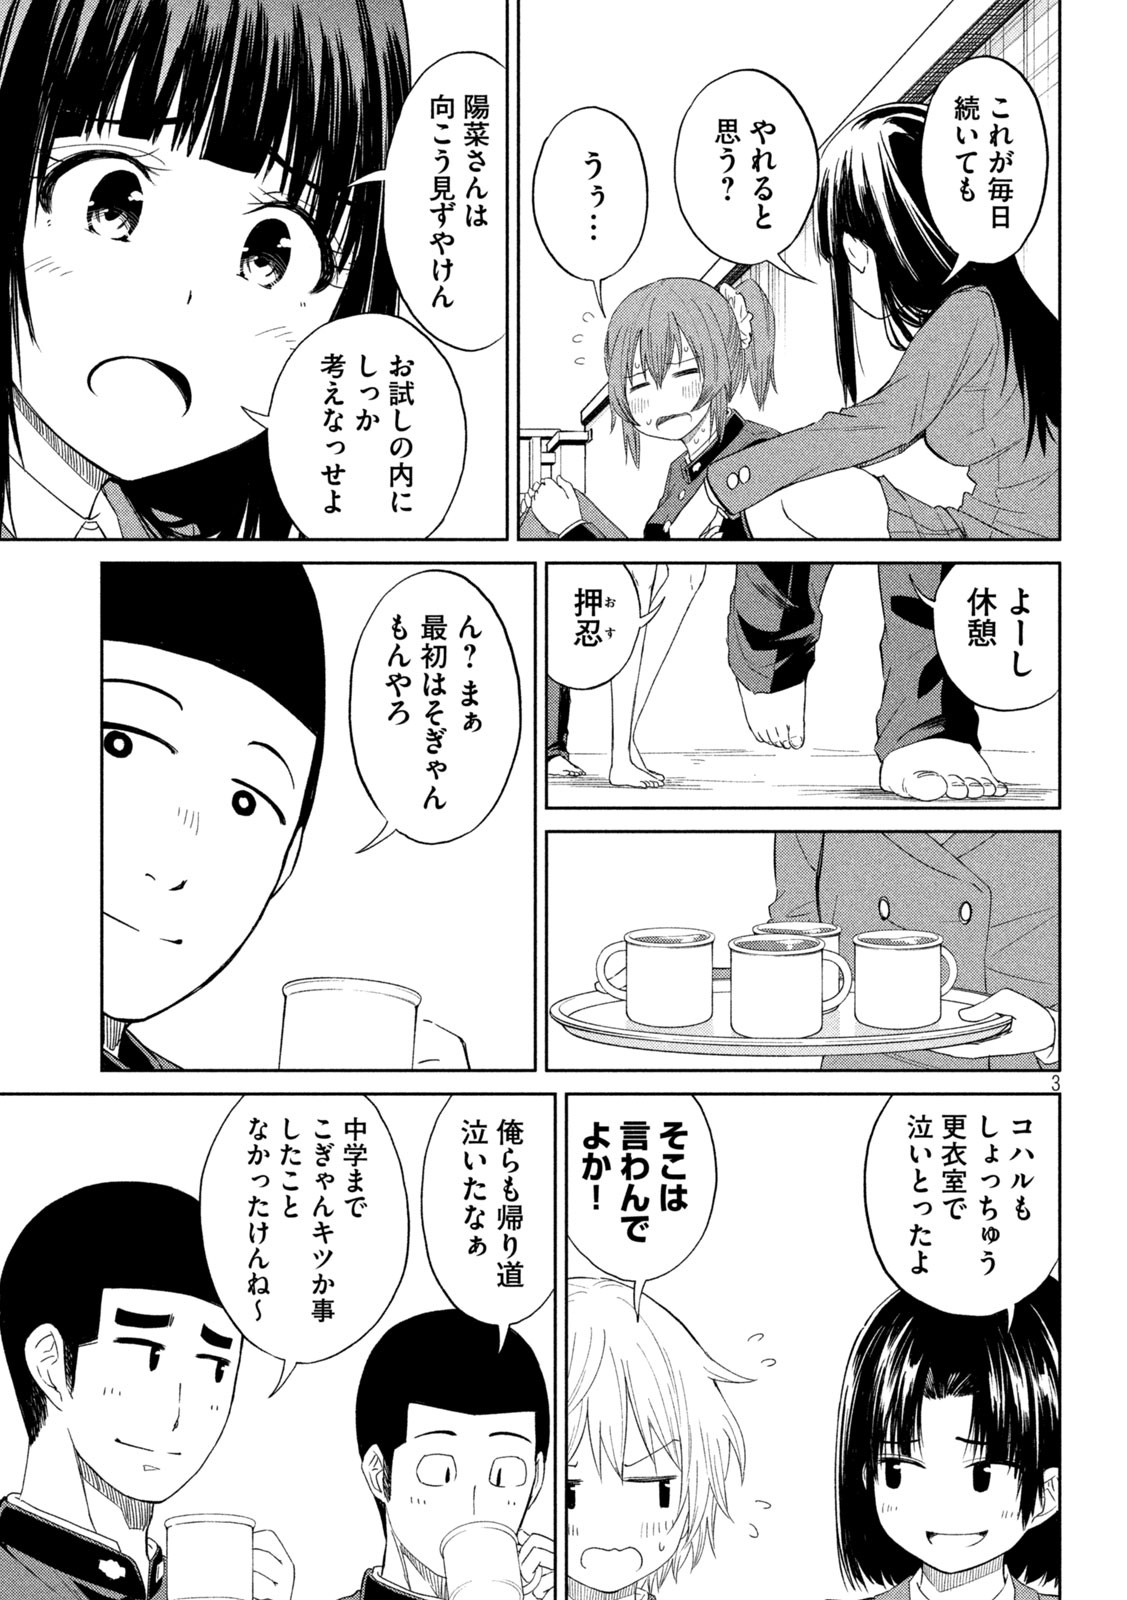 Koharu haru! - Chapter 97 - Page 3